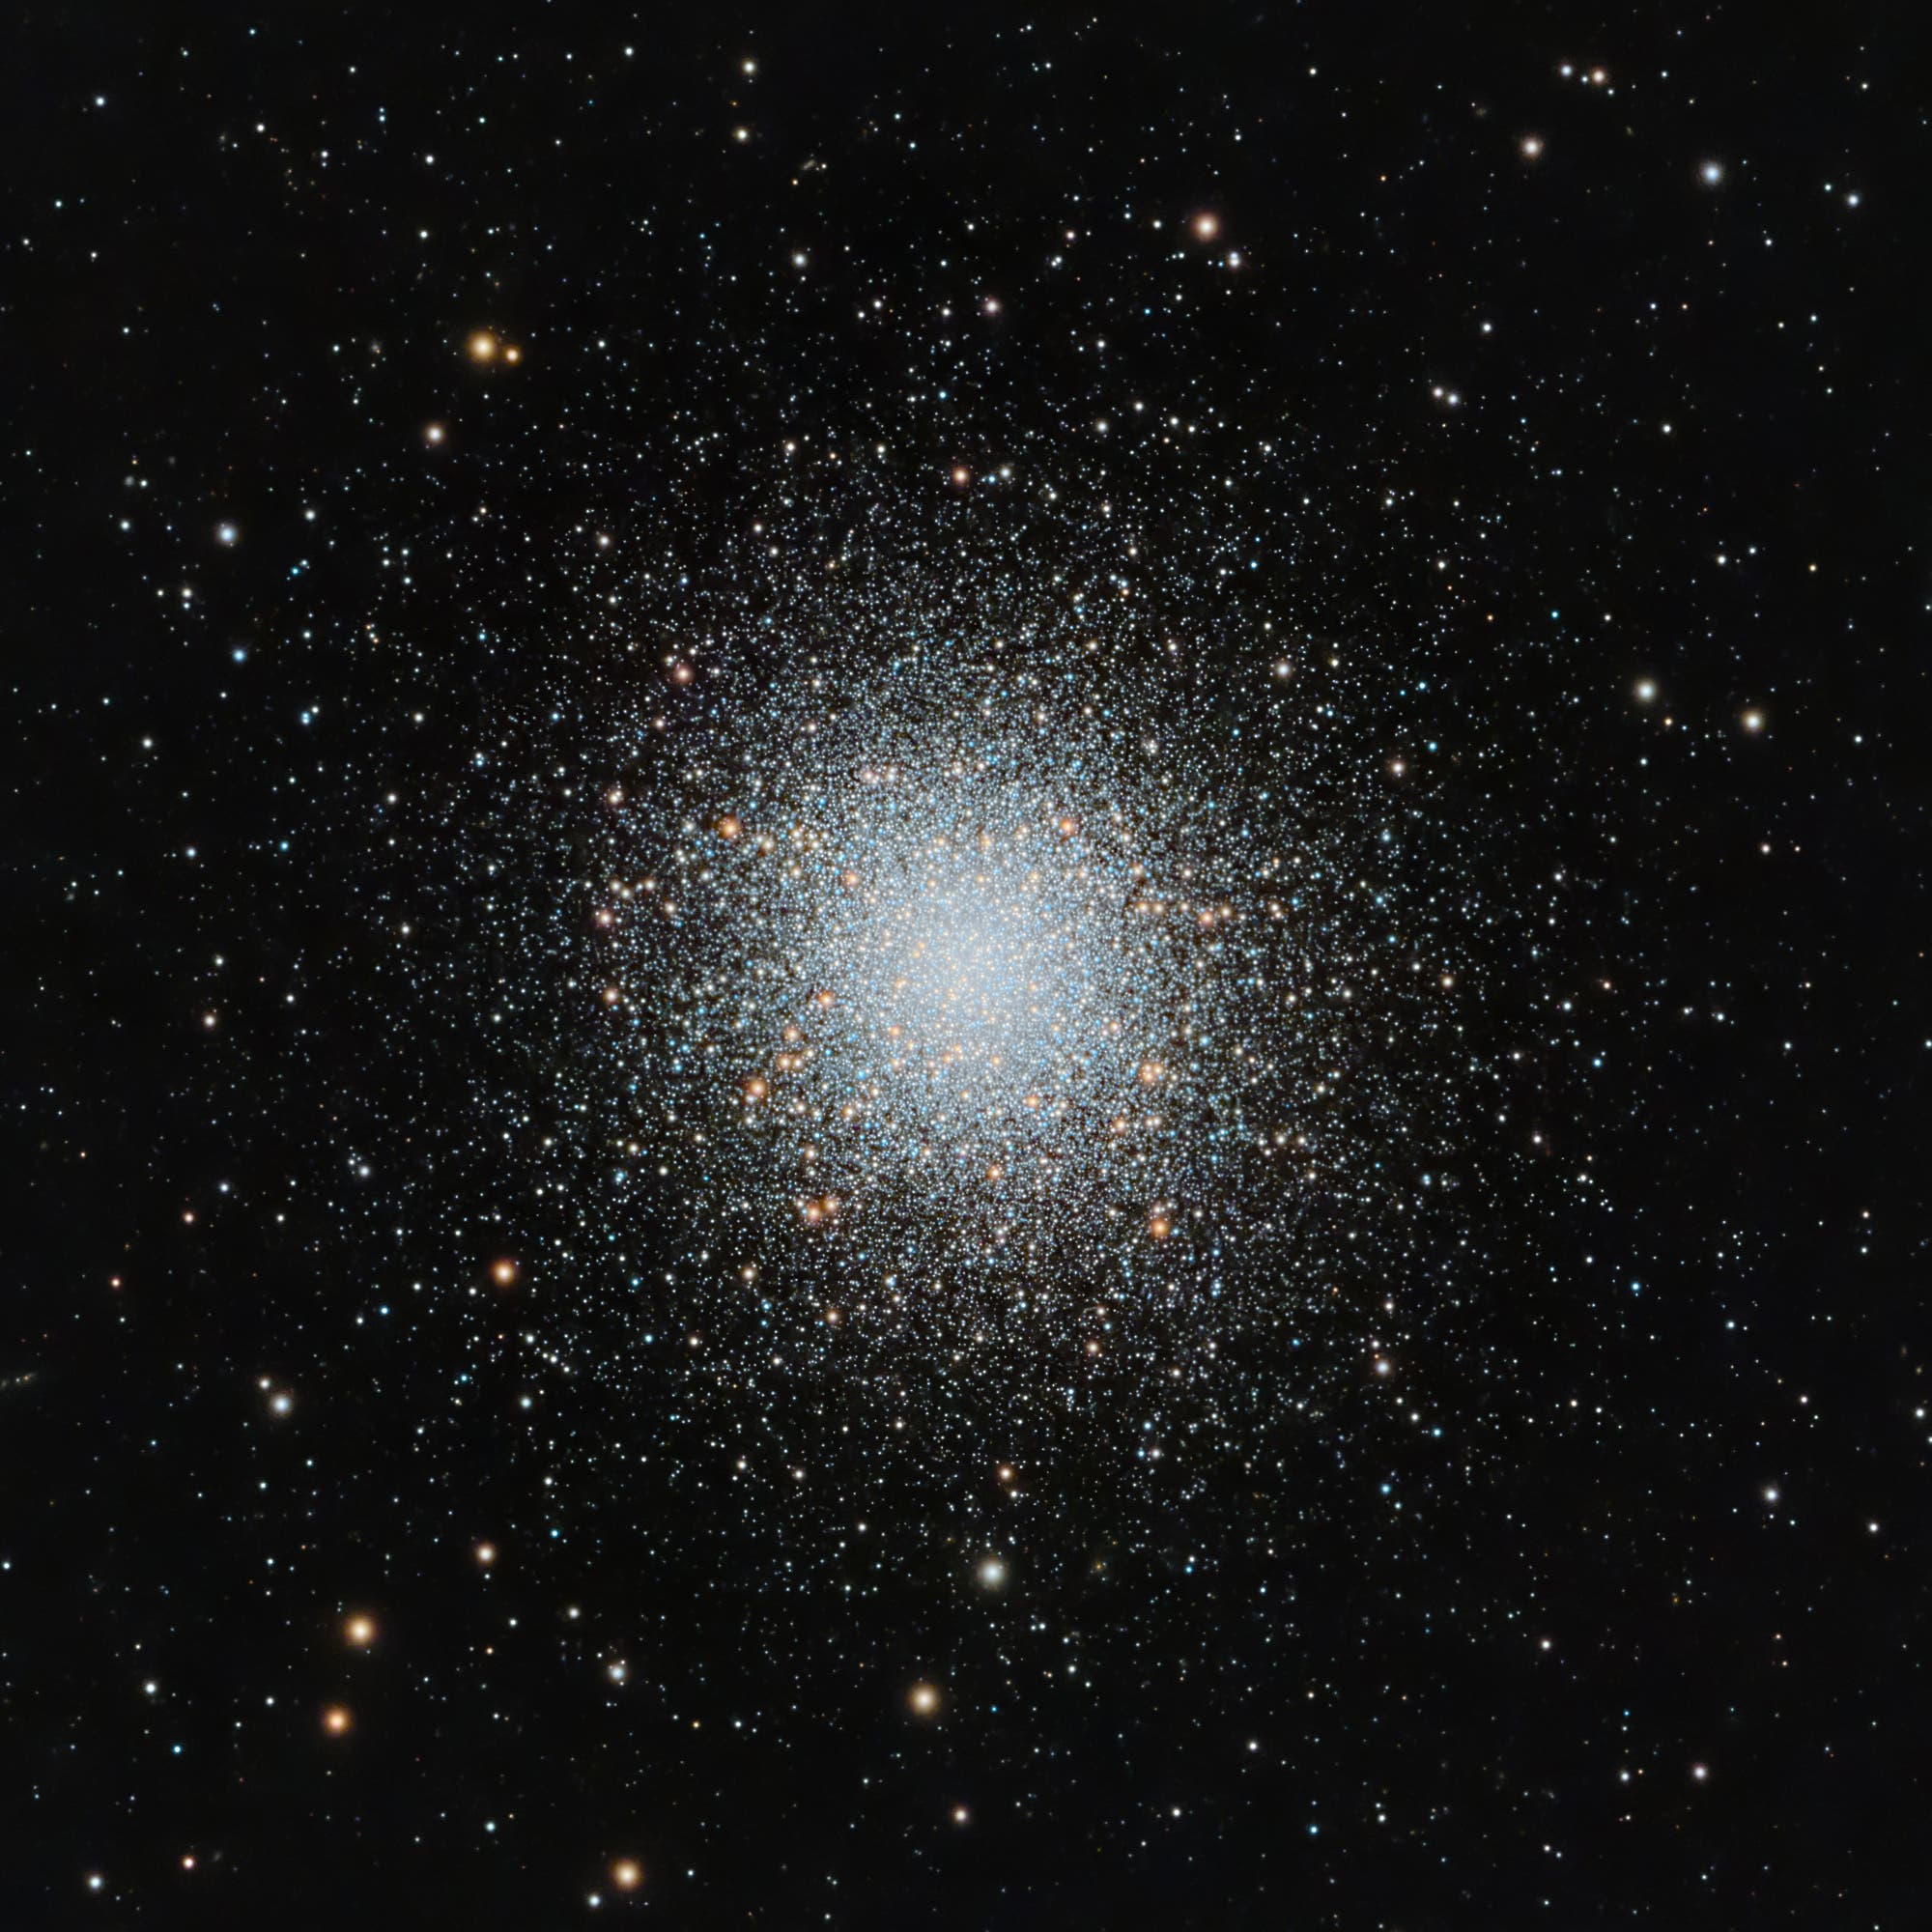 Messier 13: The Hercules globular cluster